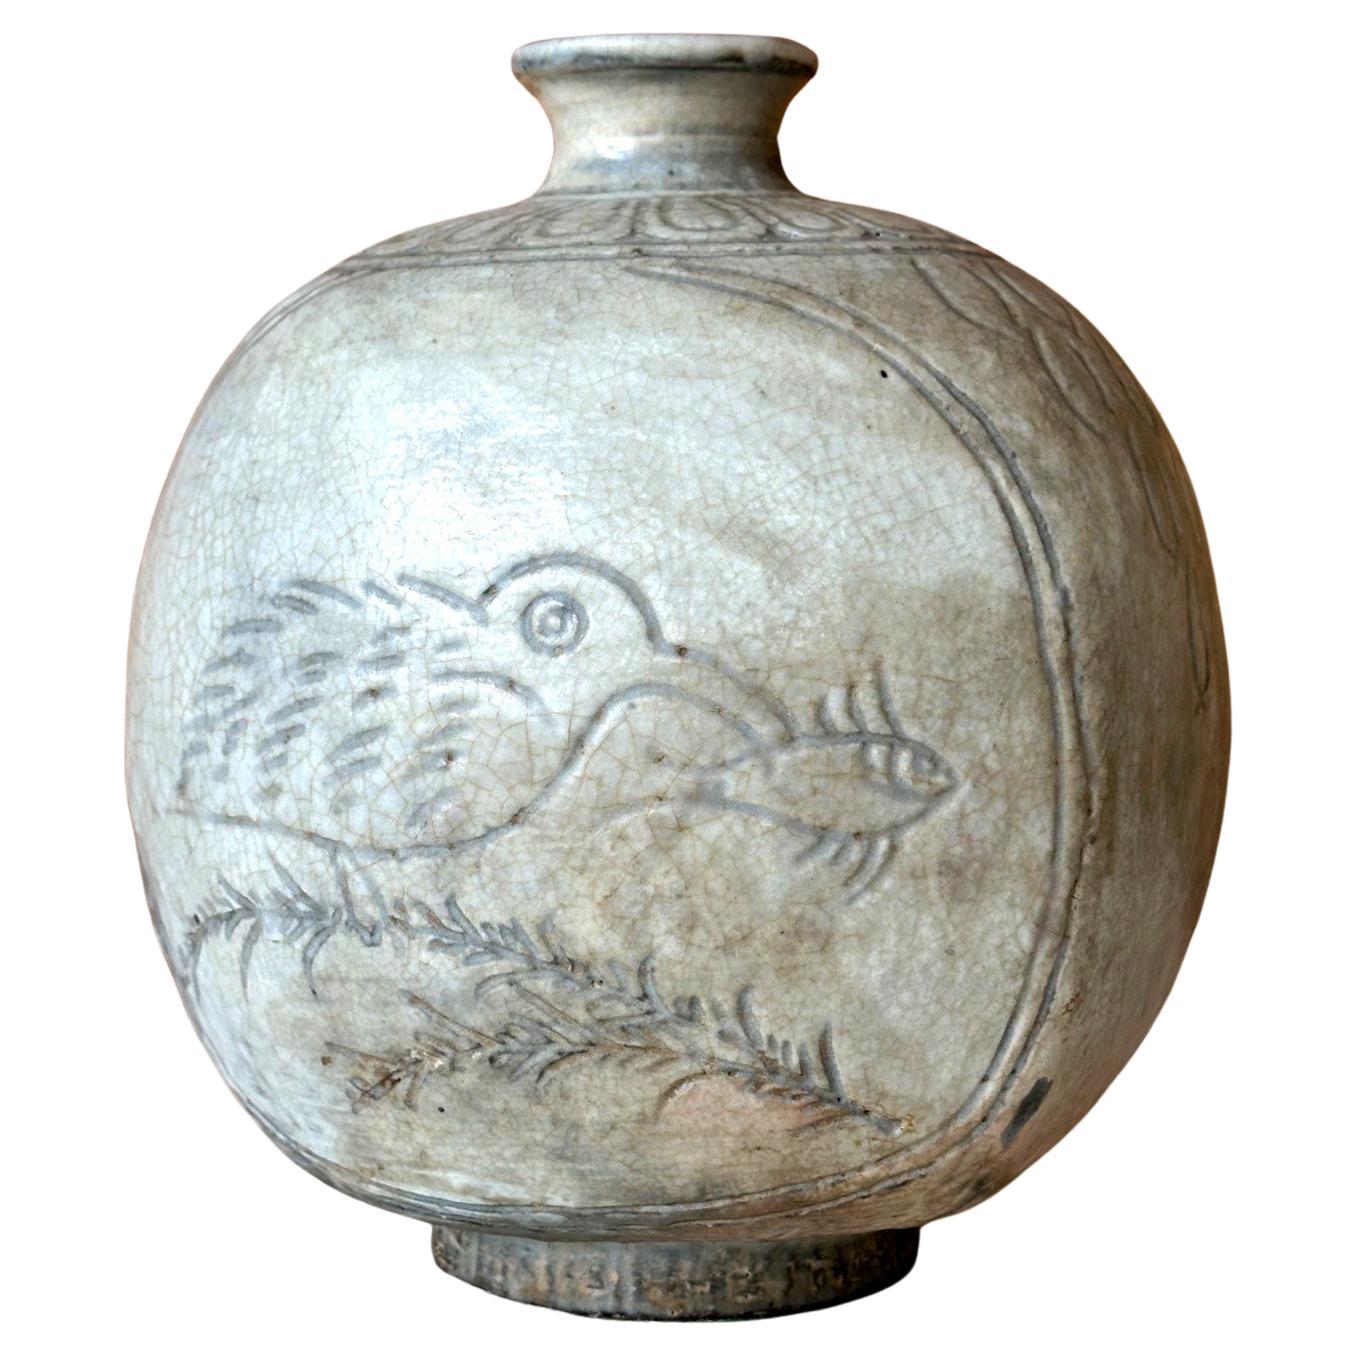 Antique Korean Buncheong Flat Bottle Vase with Incised Designs